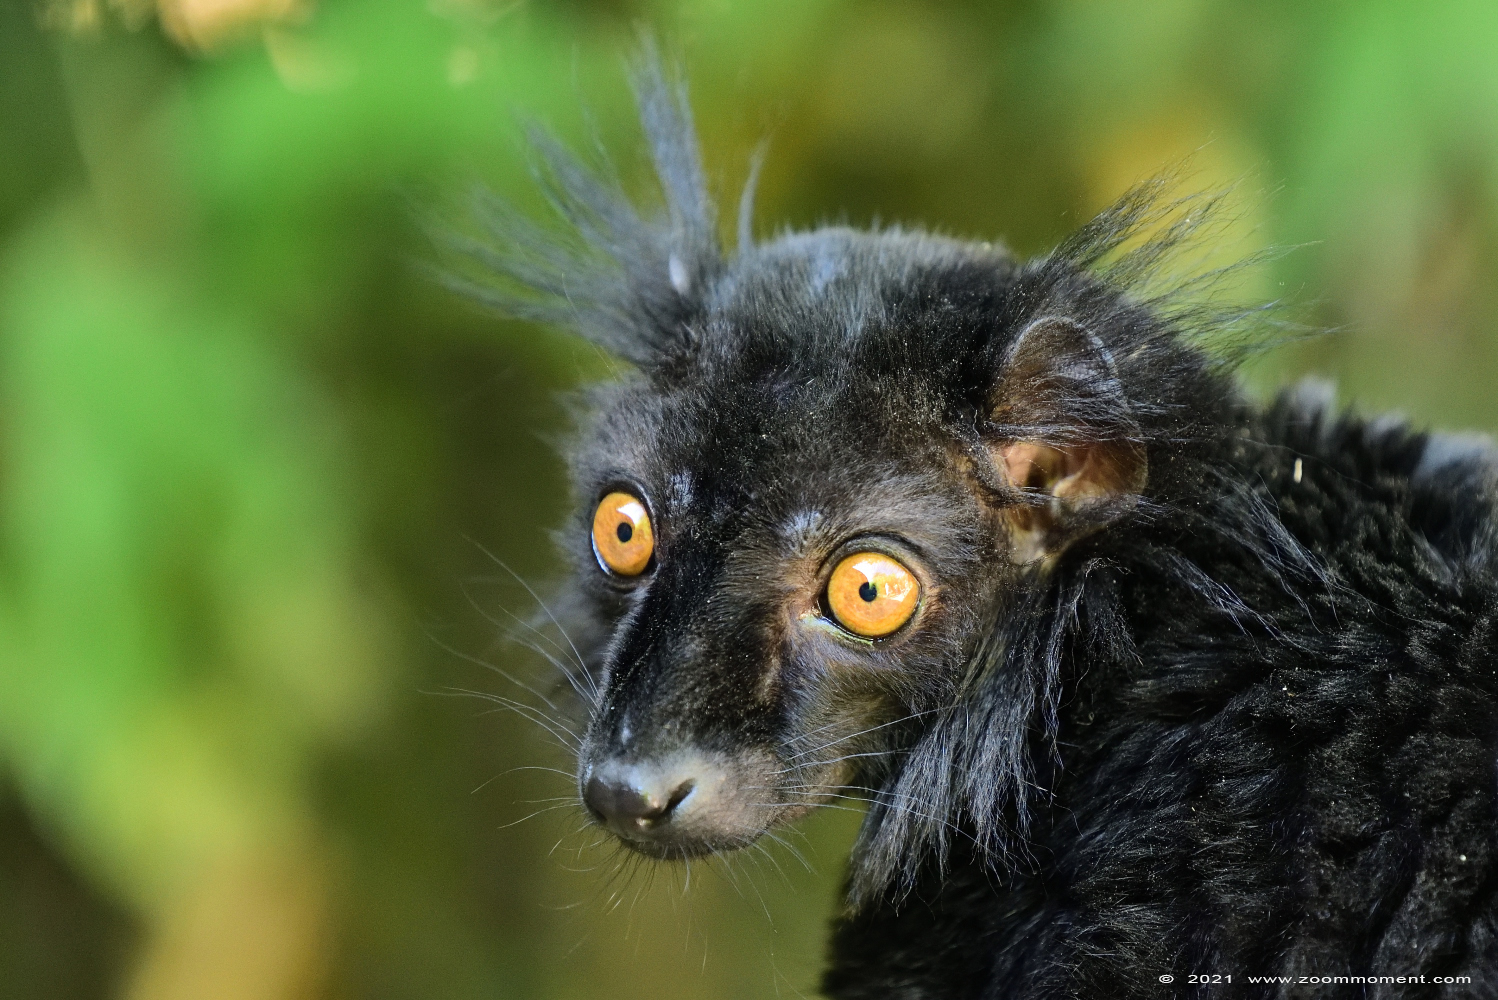 moormaki ( Eulemur macaco ) black lemur
Trefwoorden: Planckendael Belgium moormaki Eulemur macaco black lemur